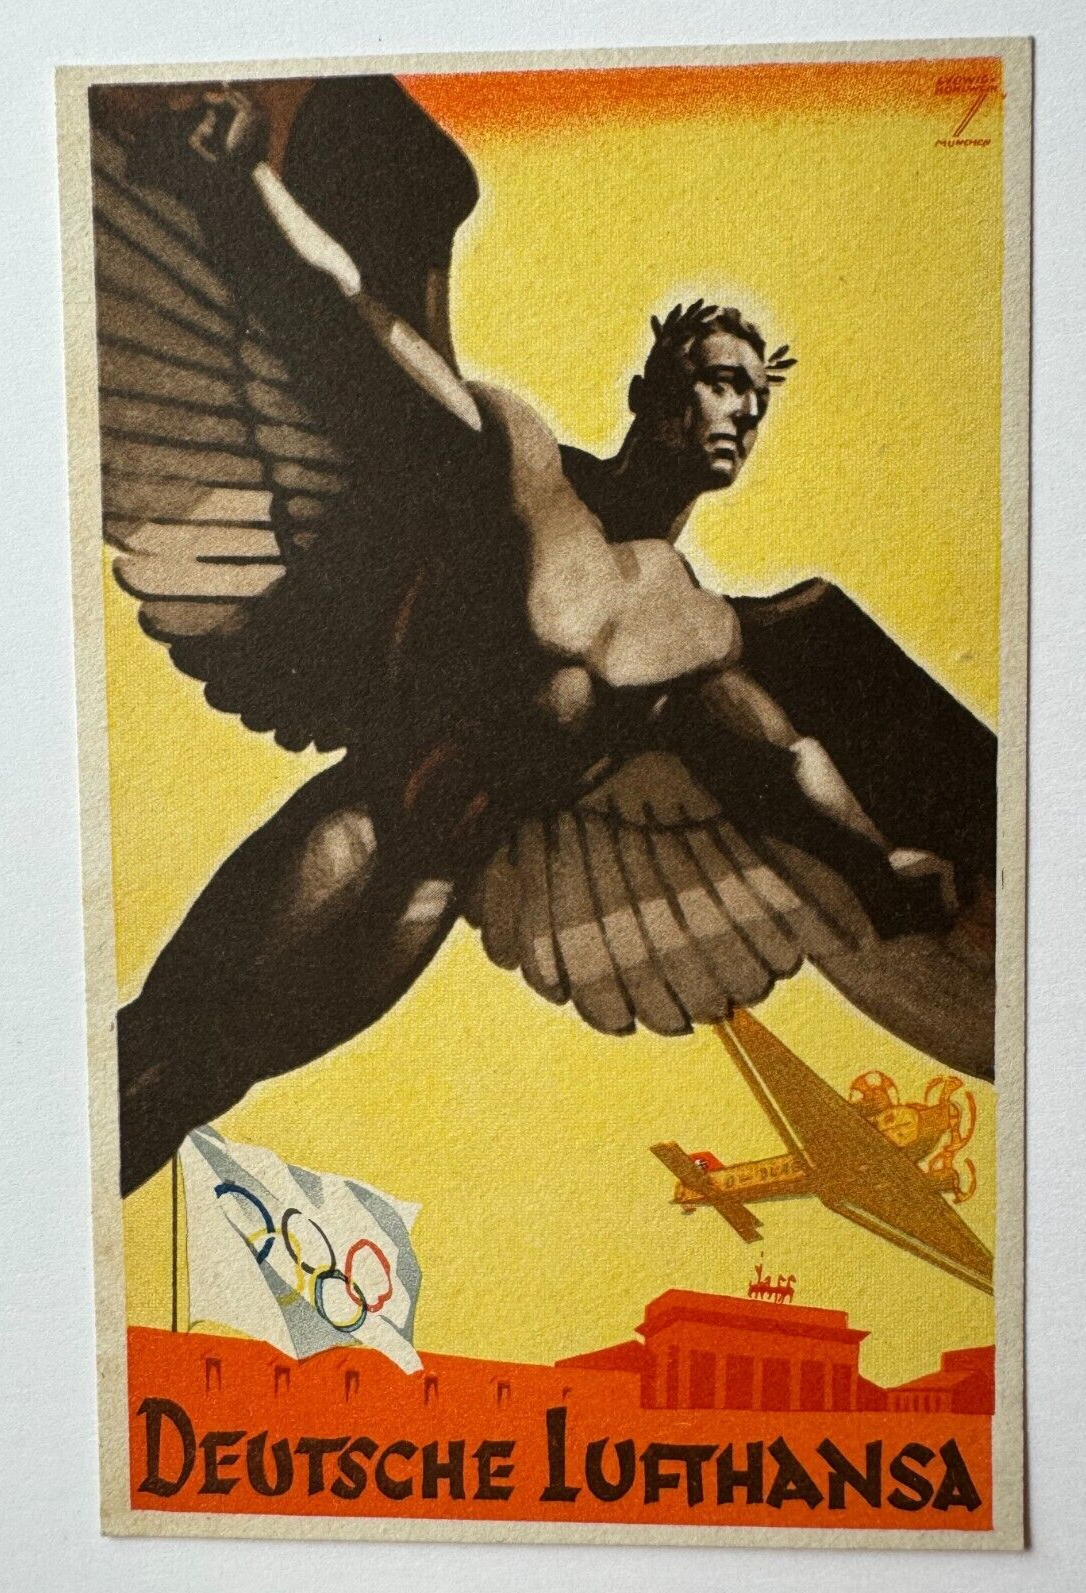 1936 Olympics Postcard Germany Deutsche Lufthansa Airlines propaganda art rings